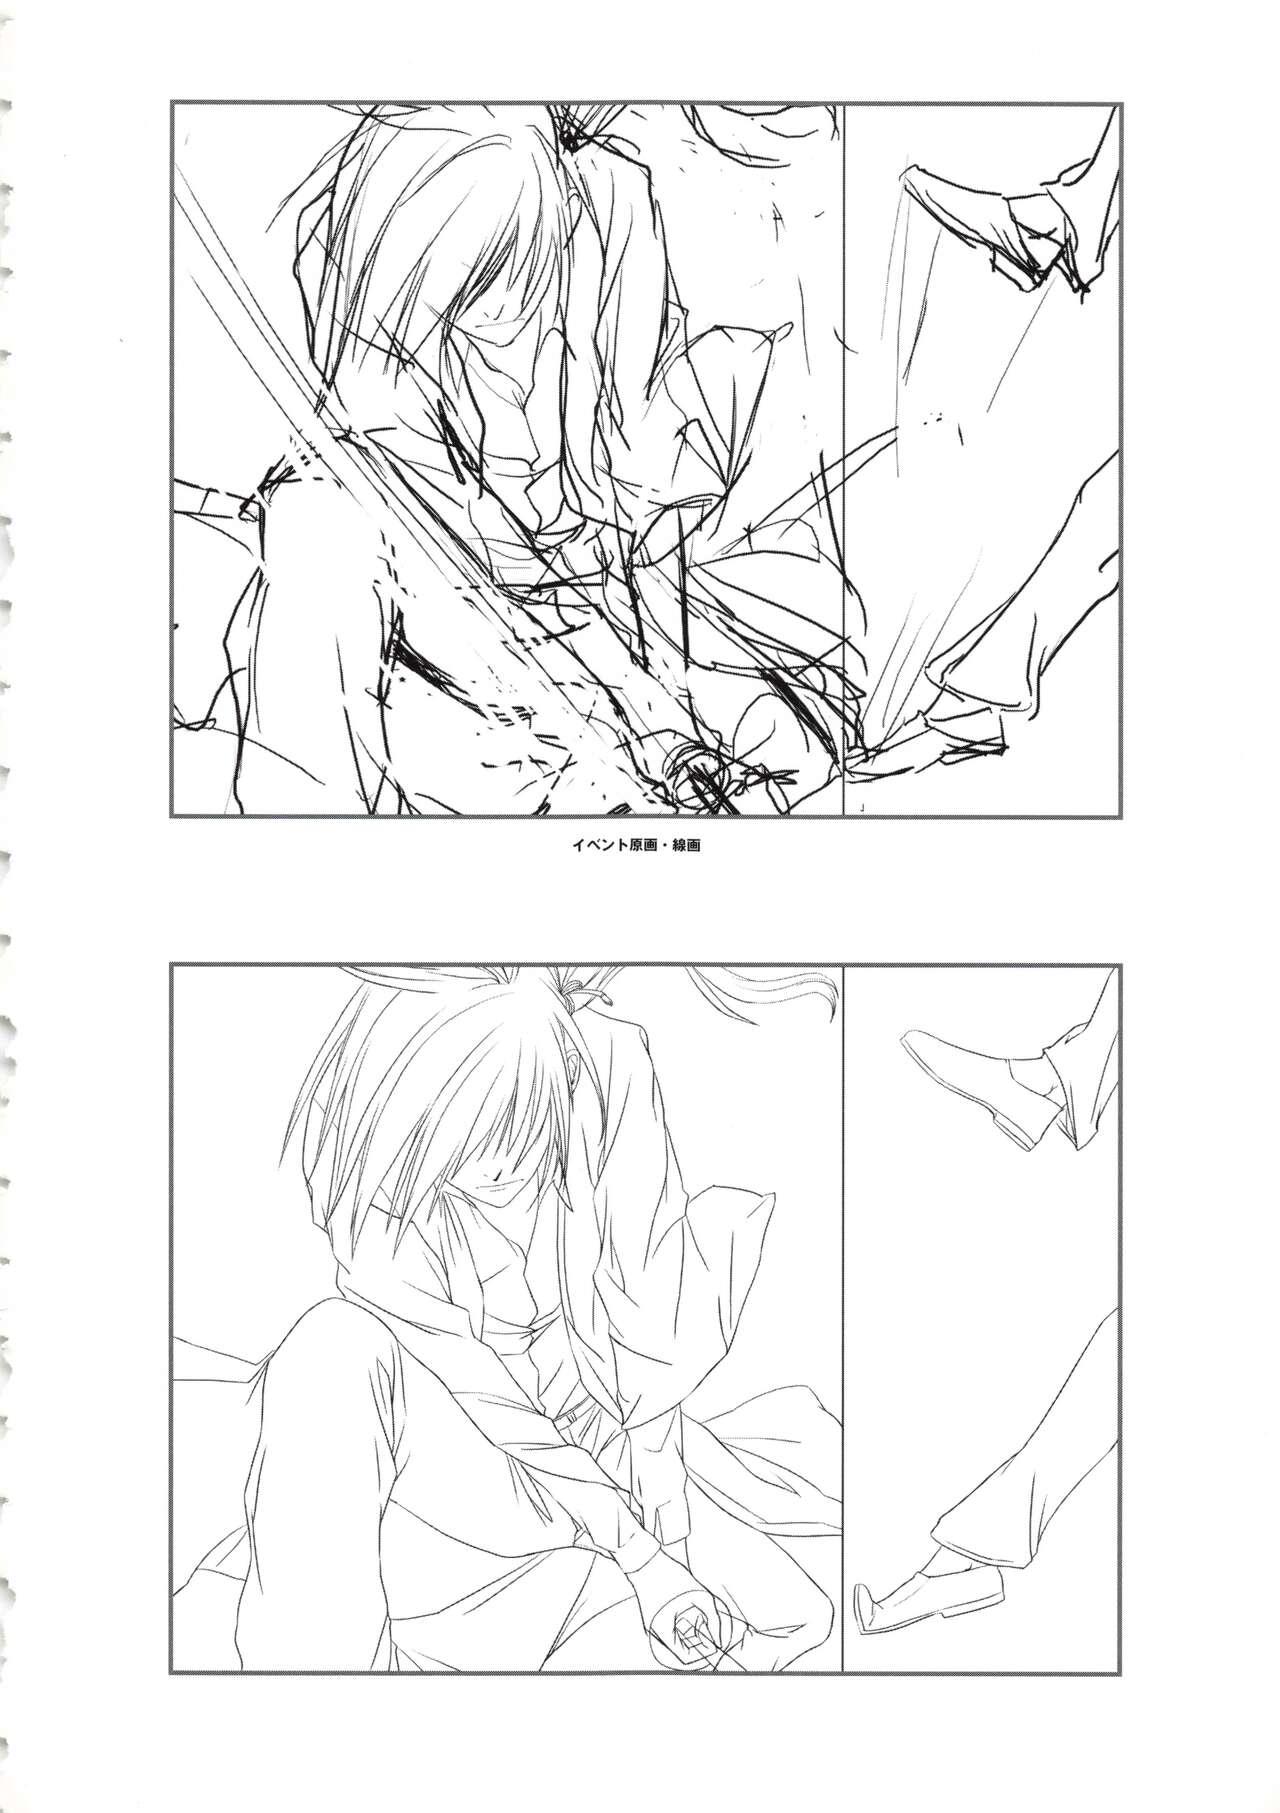 Hanachirasu - Initial Sketches and Unprocessed Illustrations - Selection 27